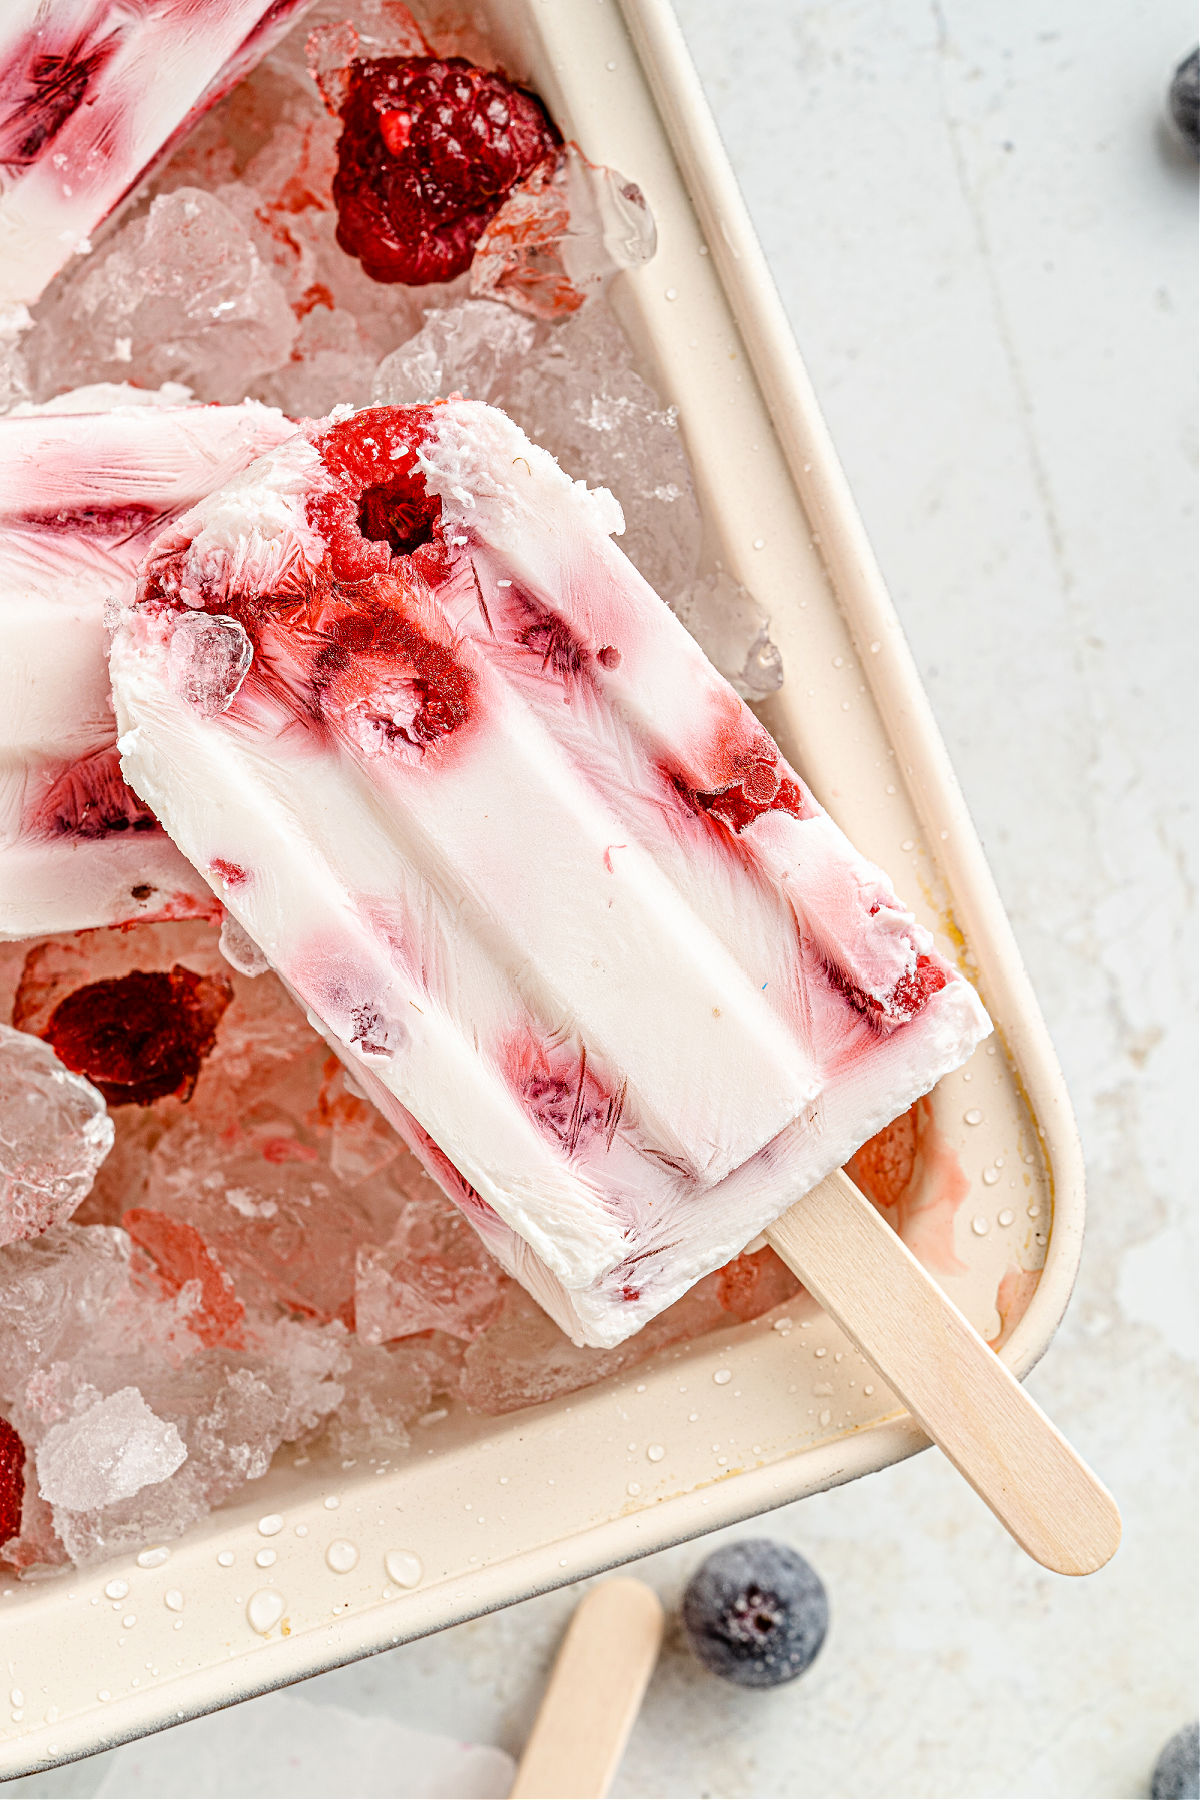 Raspberry yogurt popsicle on ice.